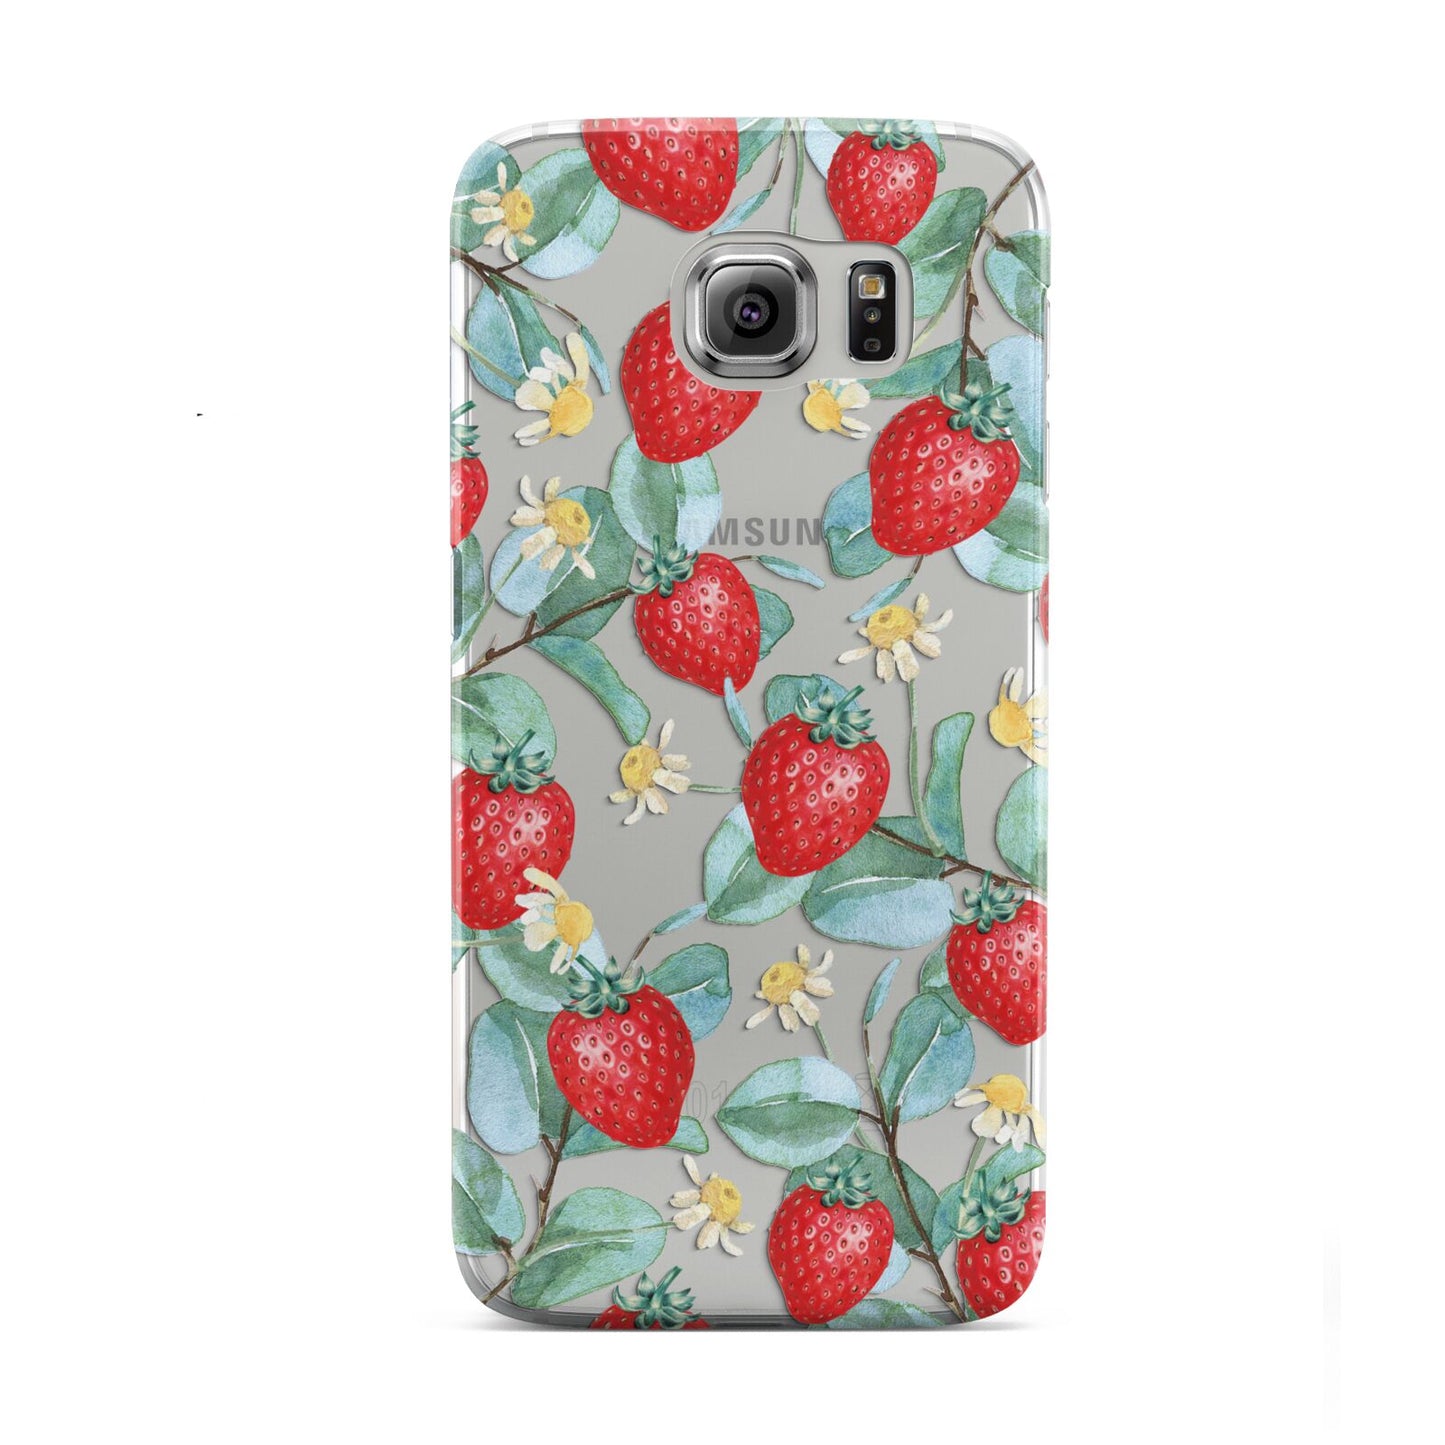 Strawberry Plant Samsung Galaxy S6 Case